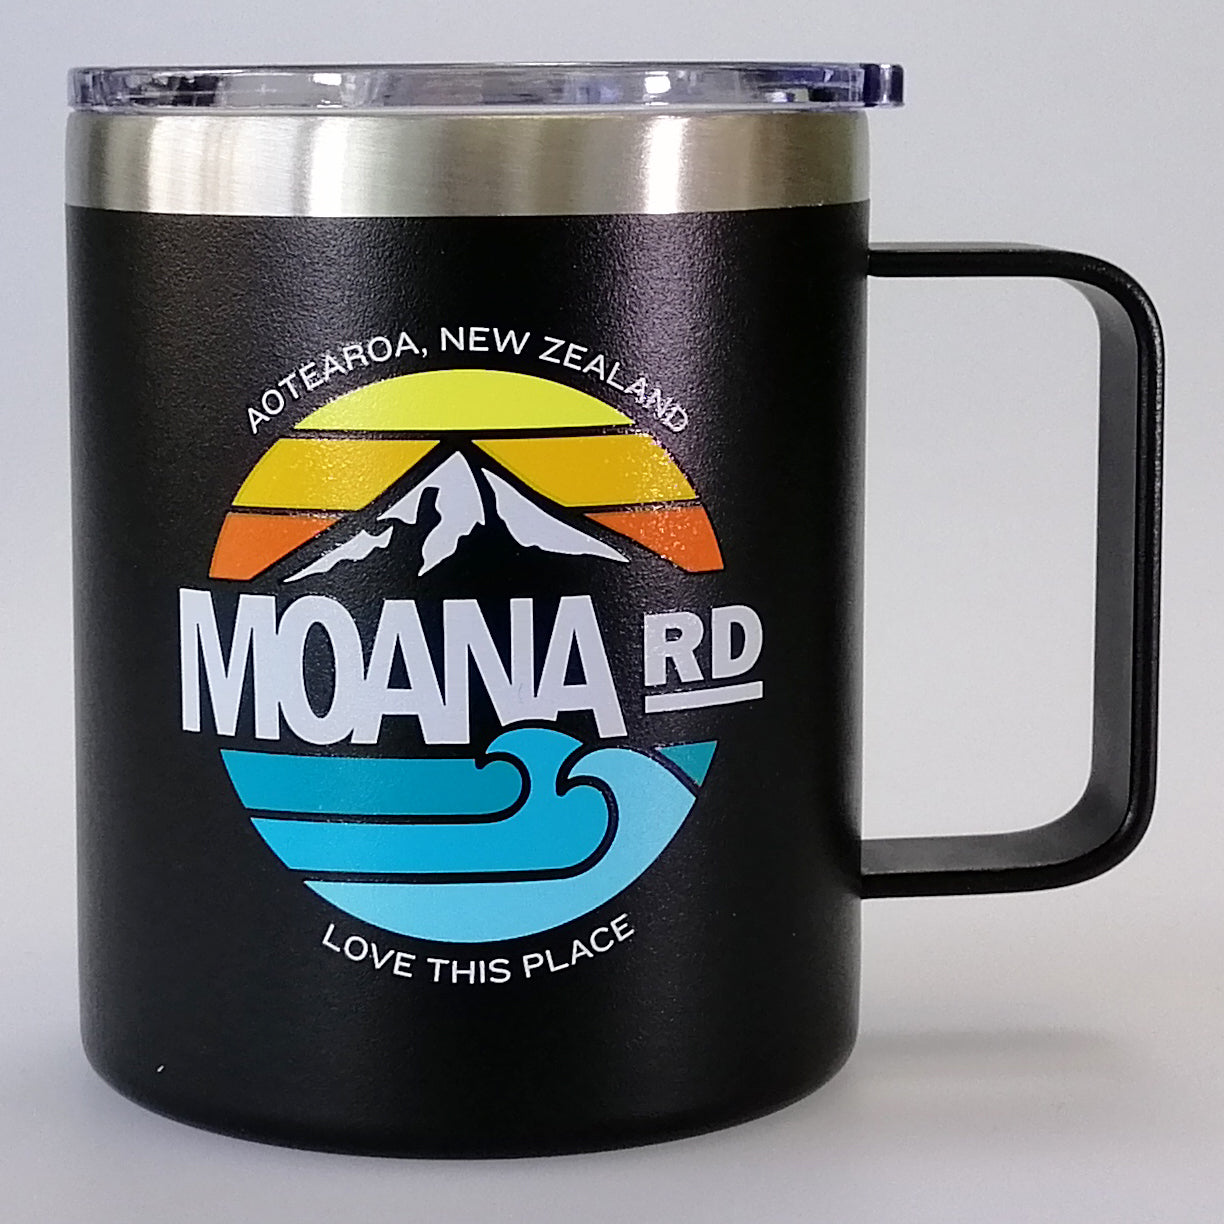 Moana Road - The Adventure Travel Mug